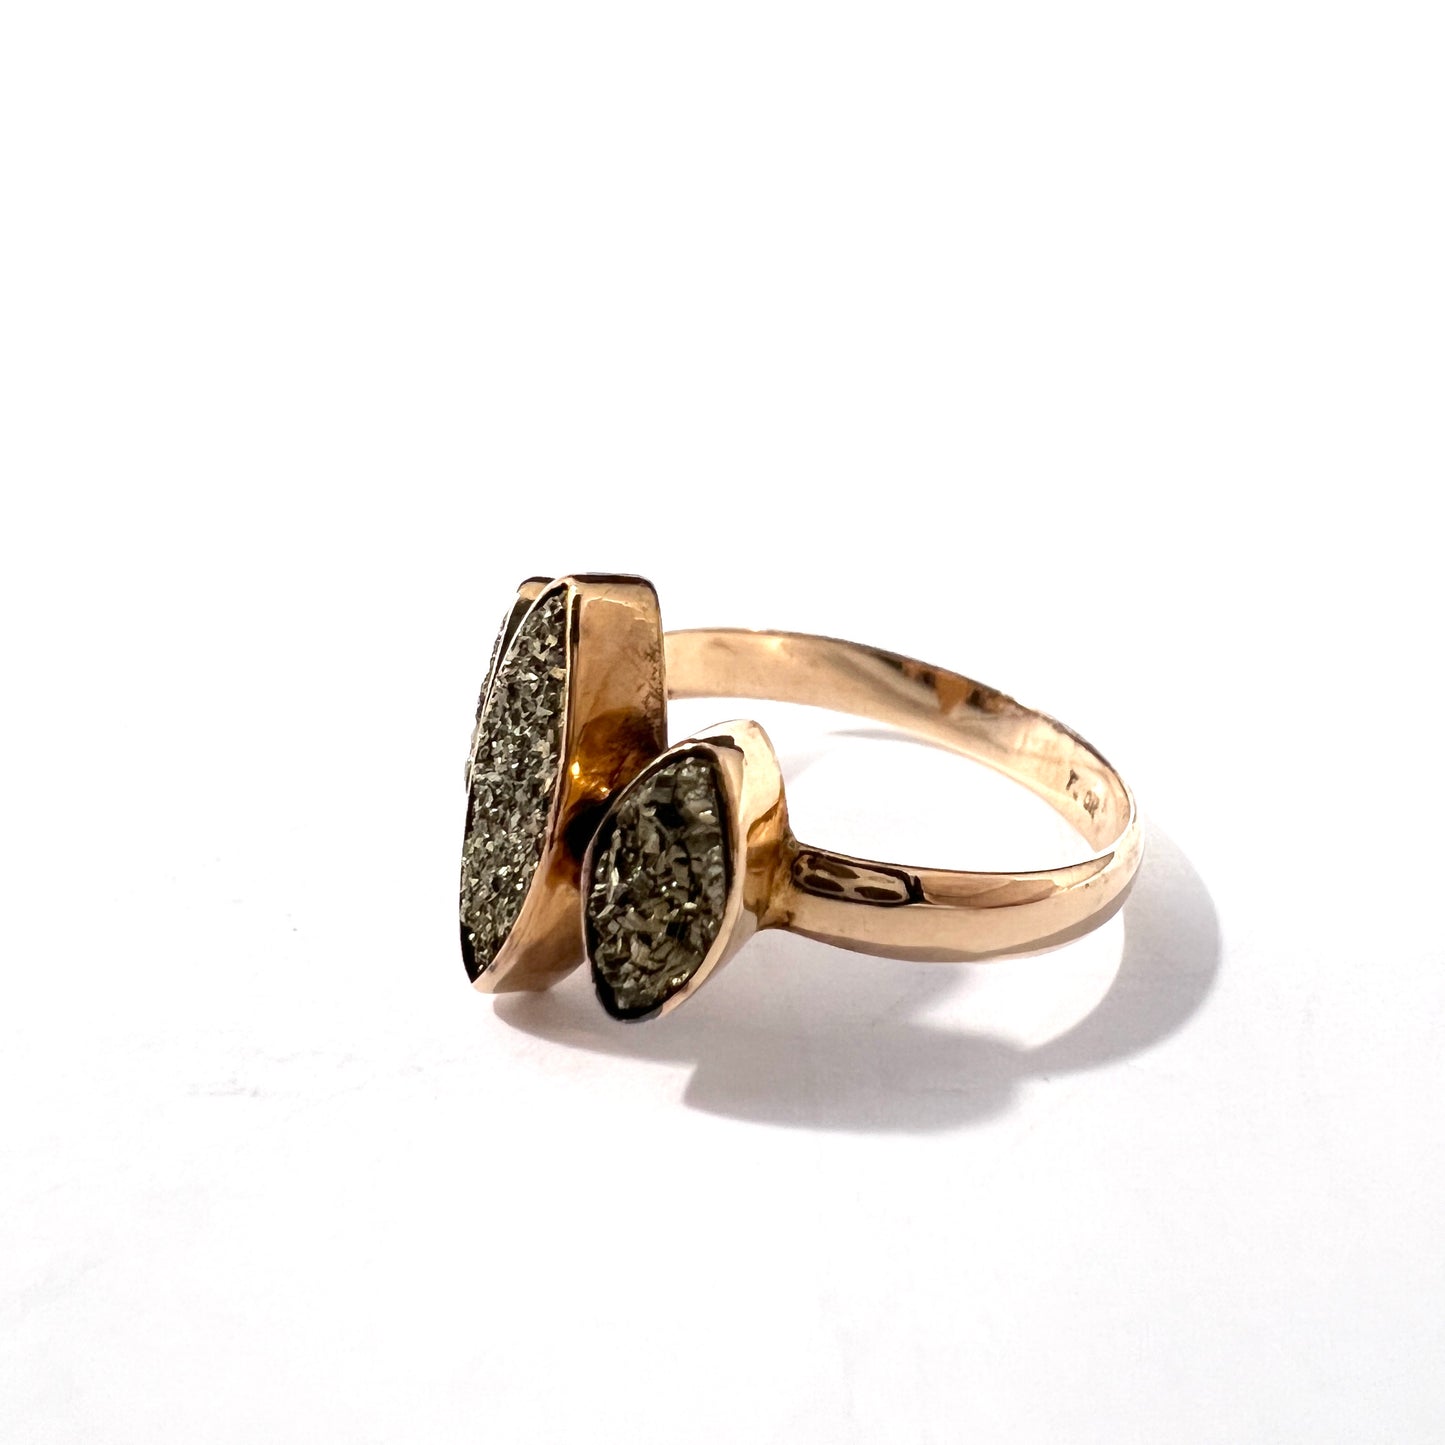 Antique Early 1900s 10k Gold Pyrite Ring. Maker FJ